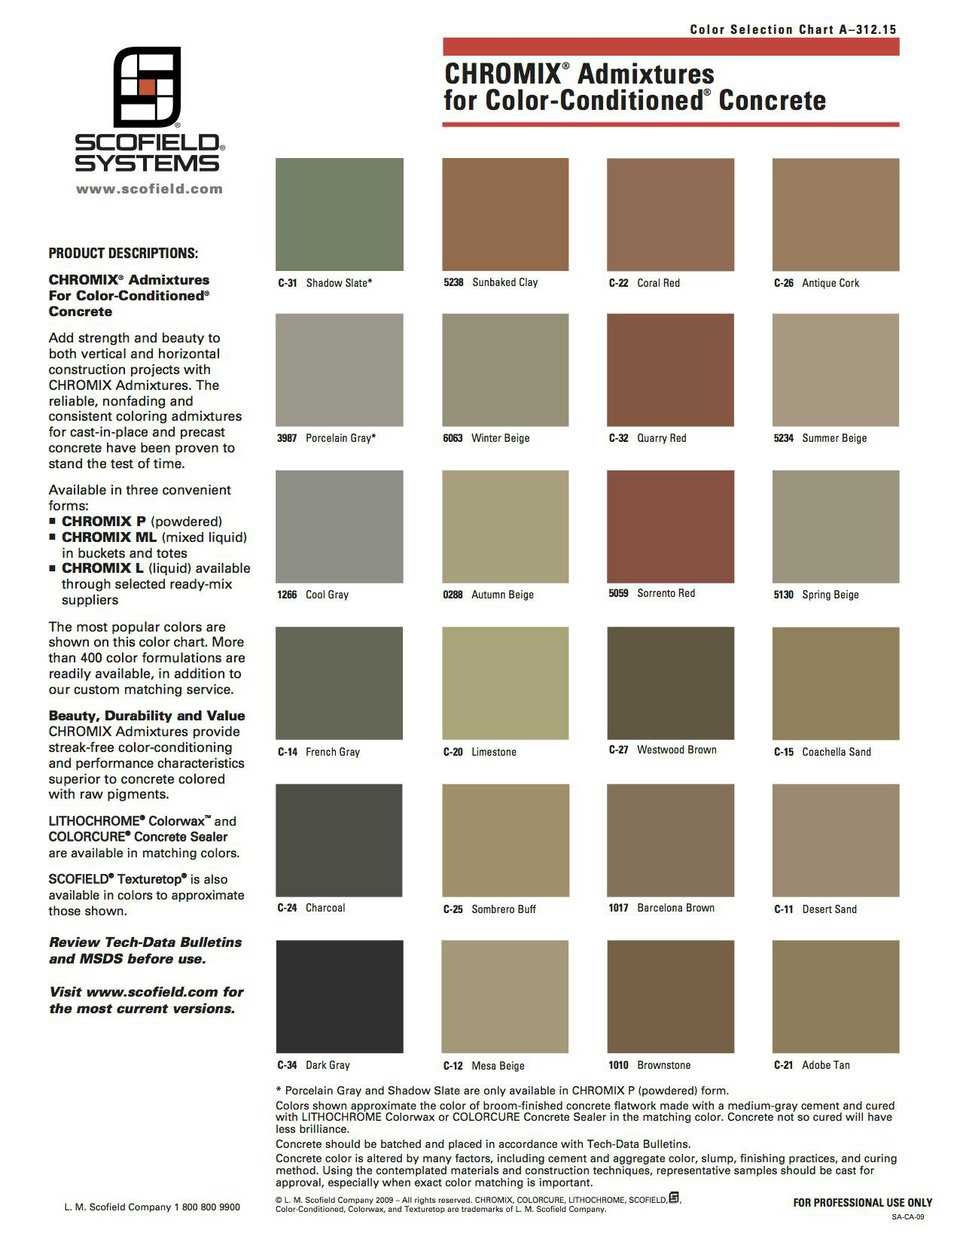 Color Chart for Color-Conditioned Concrete